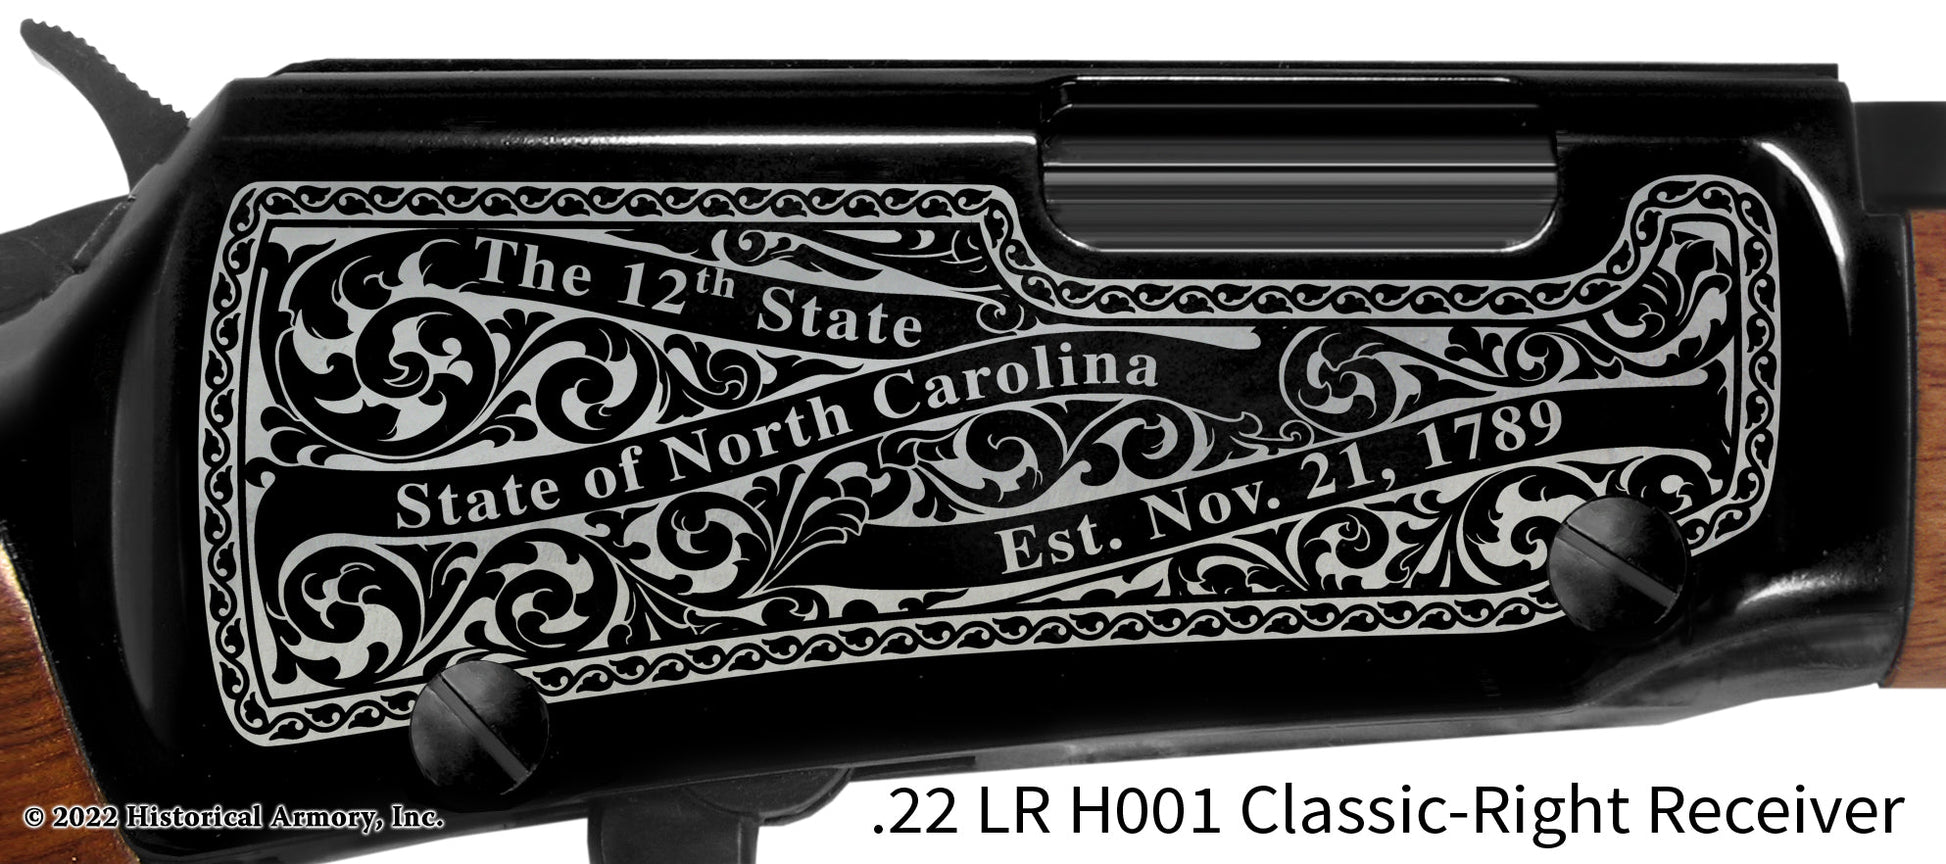 Bladen County North Carolina Engraved Henry H001 Rifle